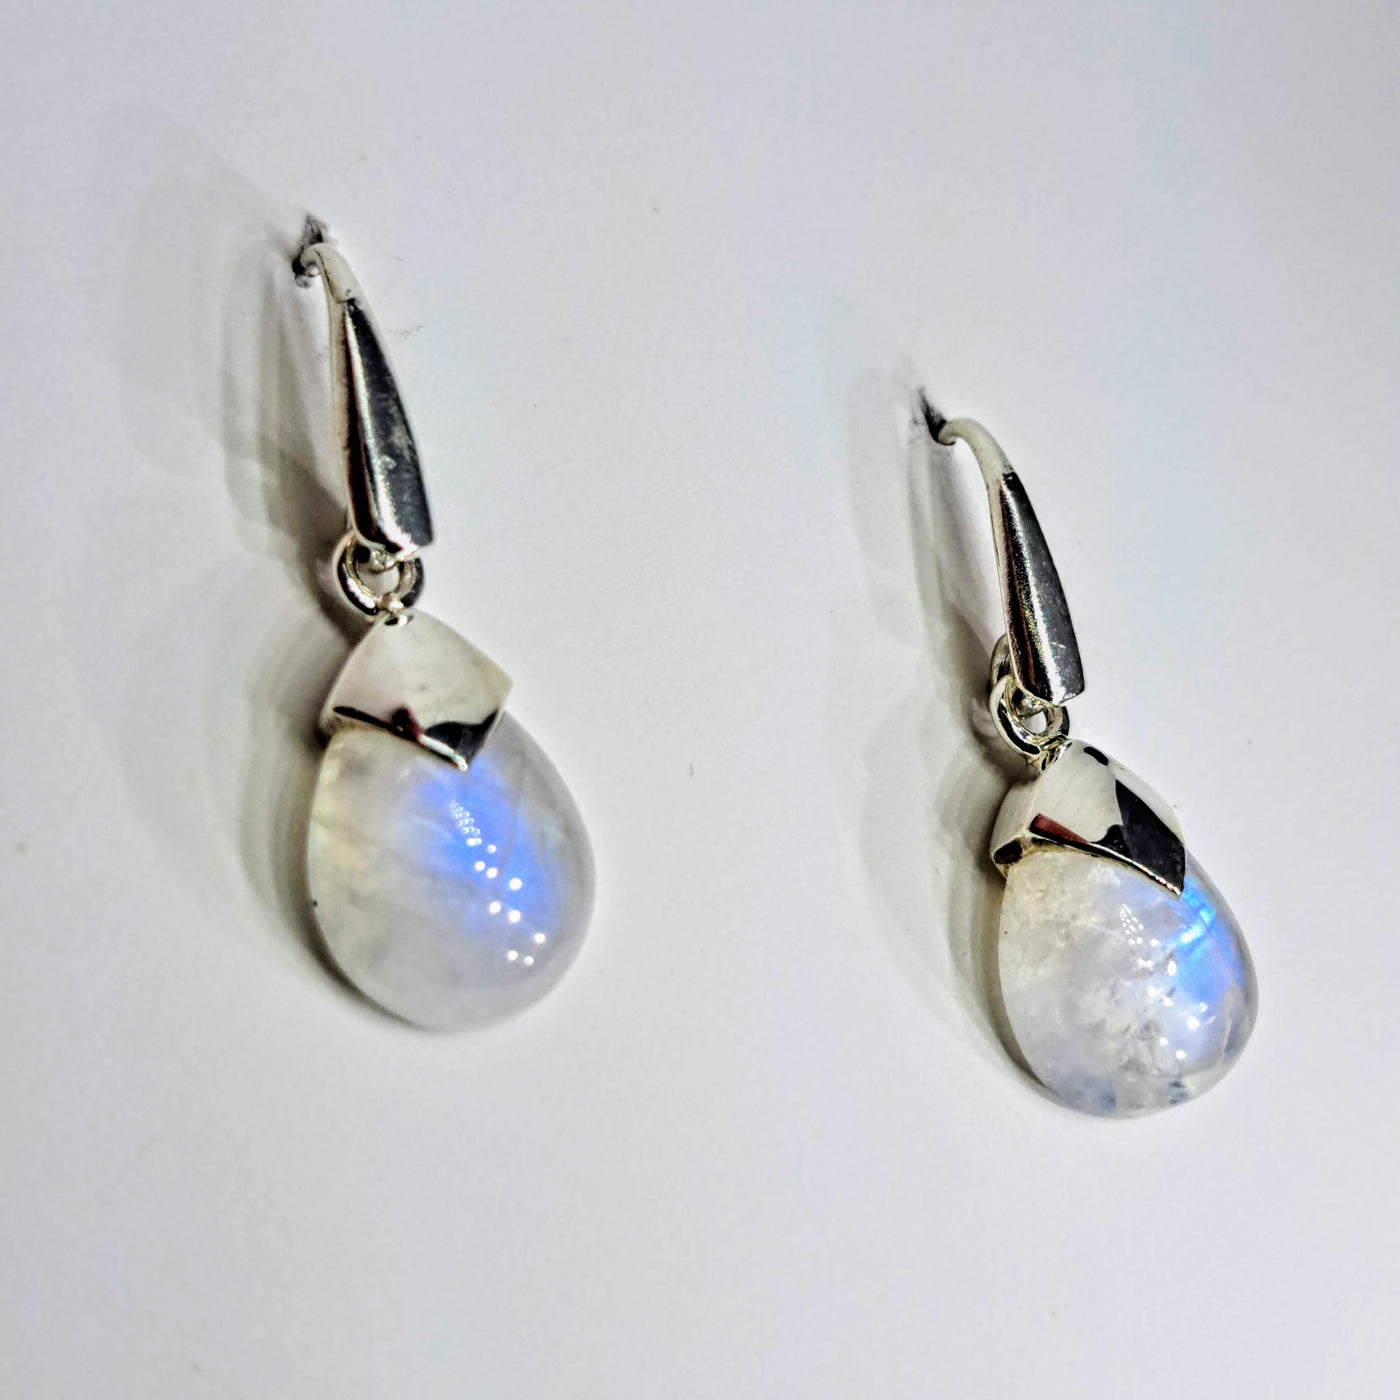 "Moon Drops" 1.25" Earrings - Moonstone, Sterling